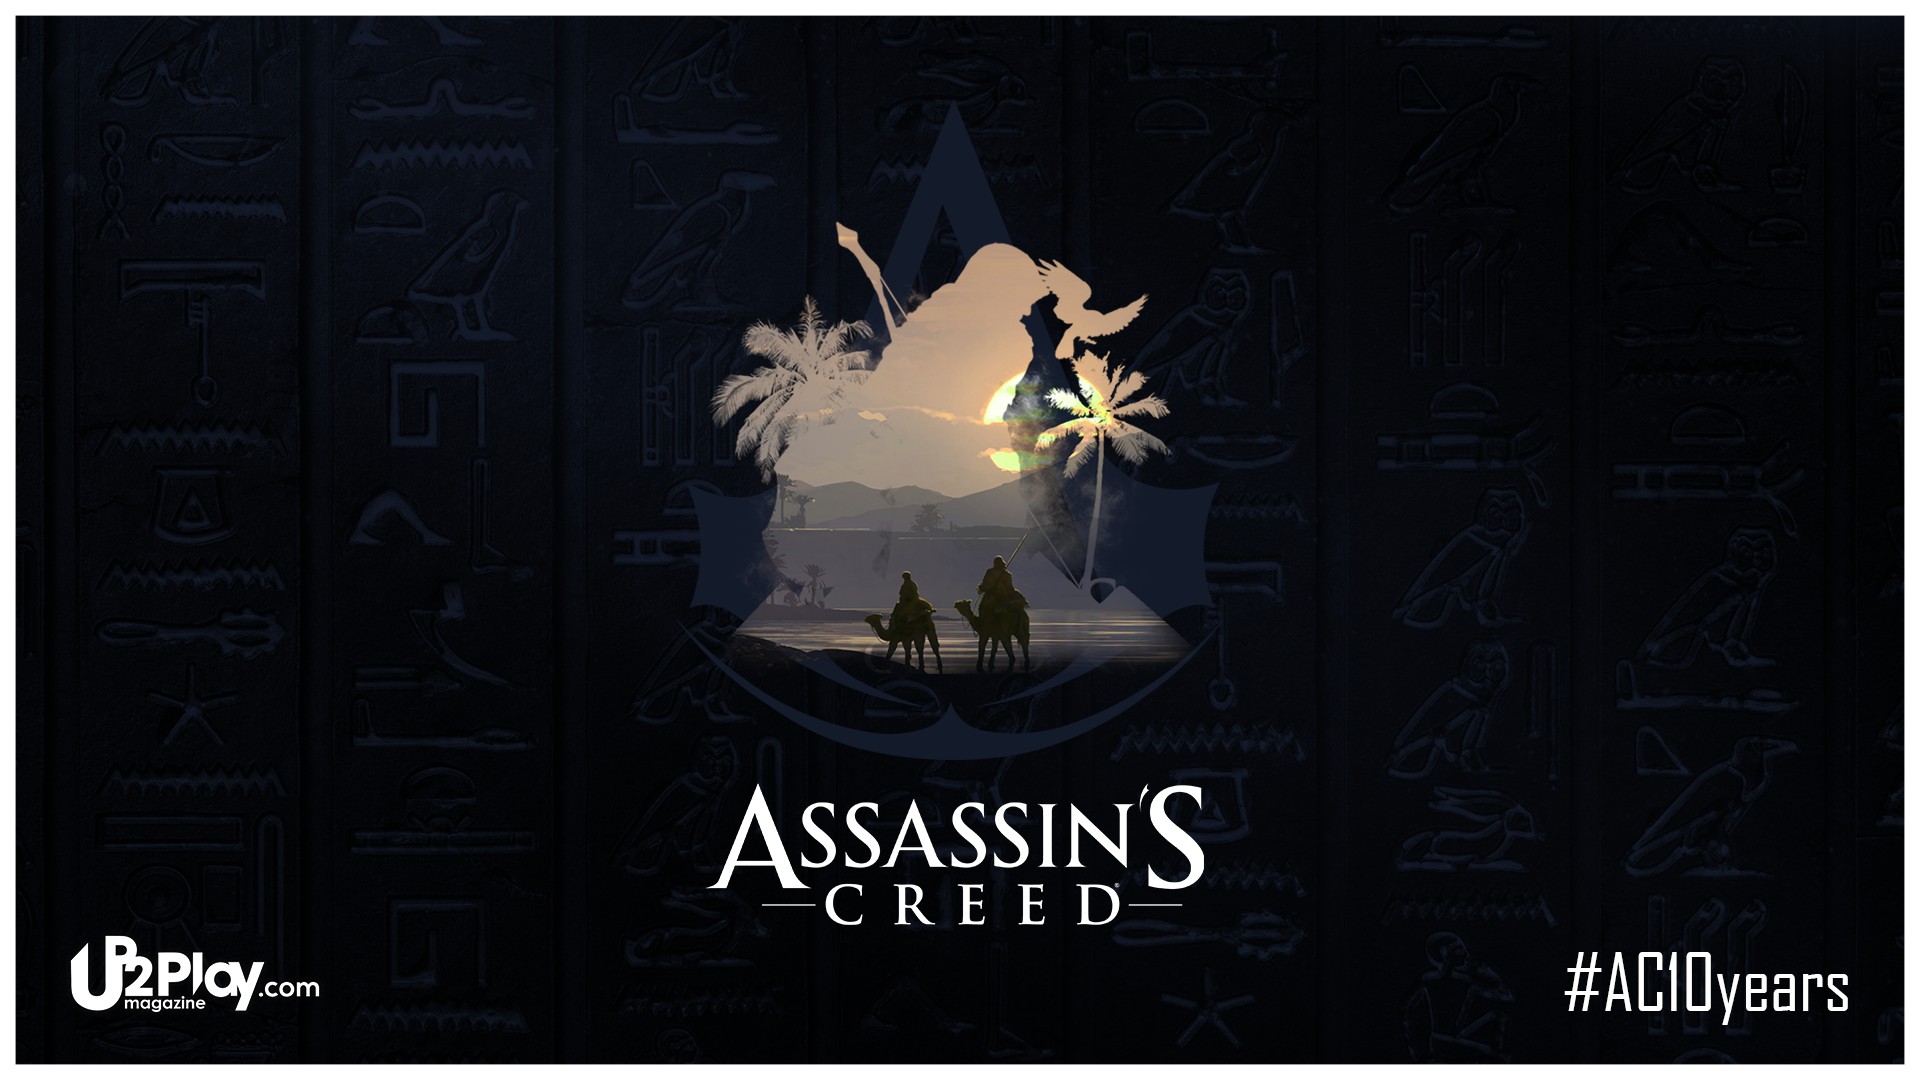 Assassins Creed Assassins Creed Brotherhood Assassin 039 S Creed Unity Assassin 039 S Creed Syndicate Video Games Ubisoft Ubi30 Windows 10 Anniversary Wallpapers Hd Desktop And Mobile Backgrounds